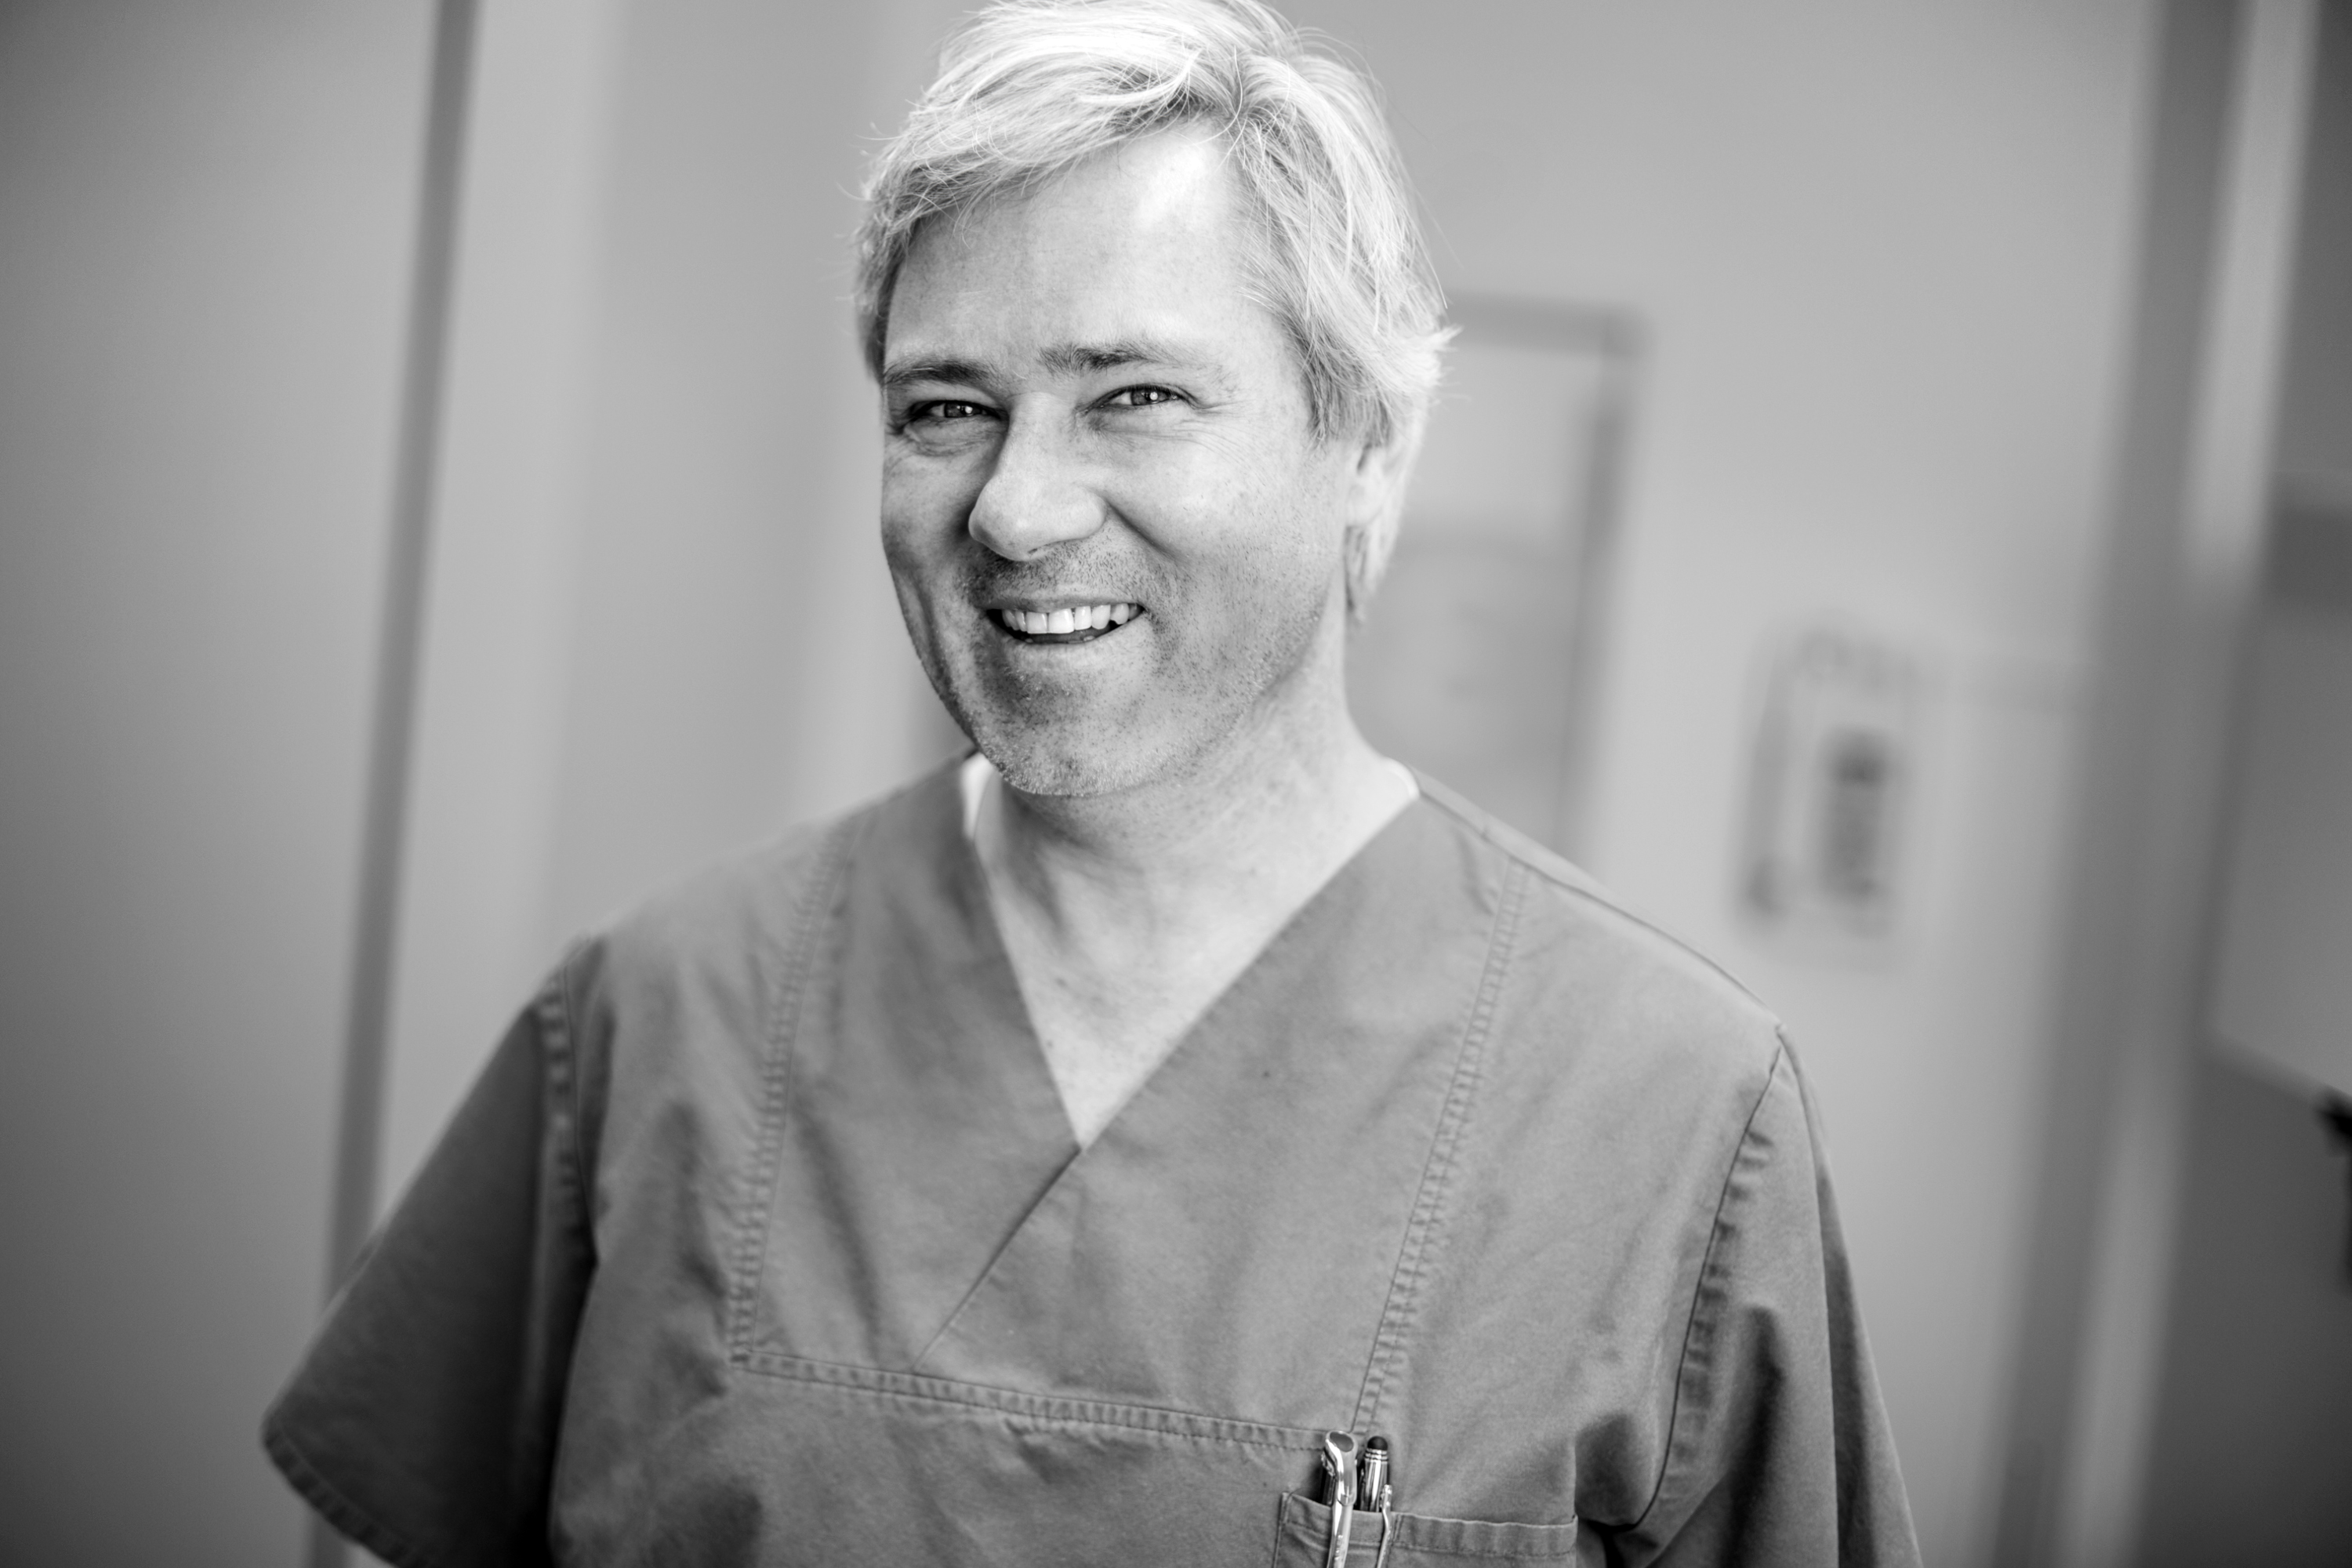 Dr. Peter Lintzen